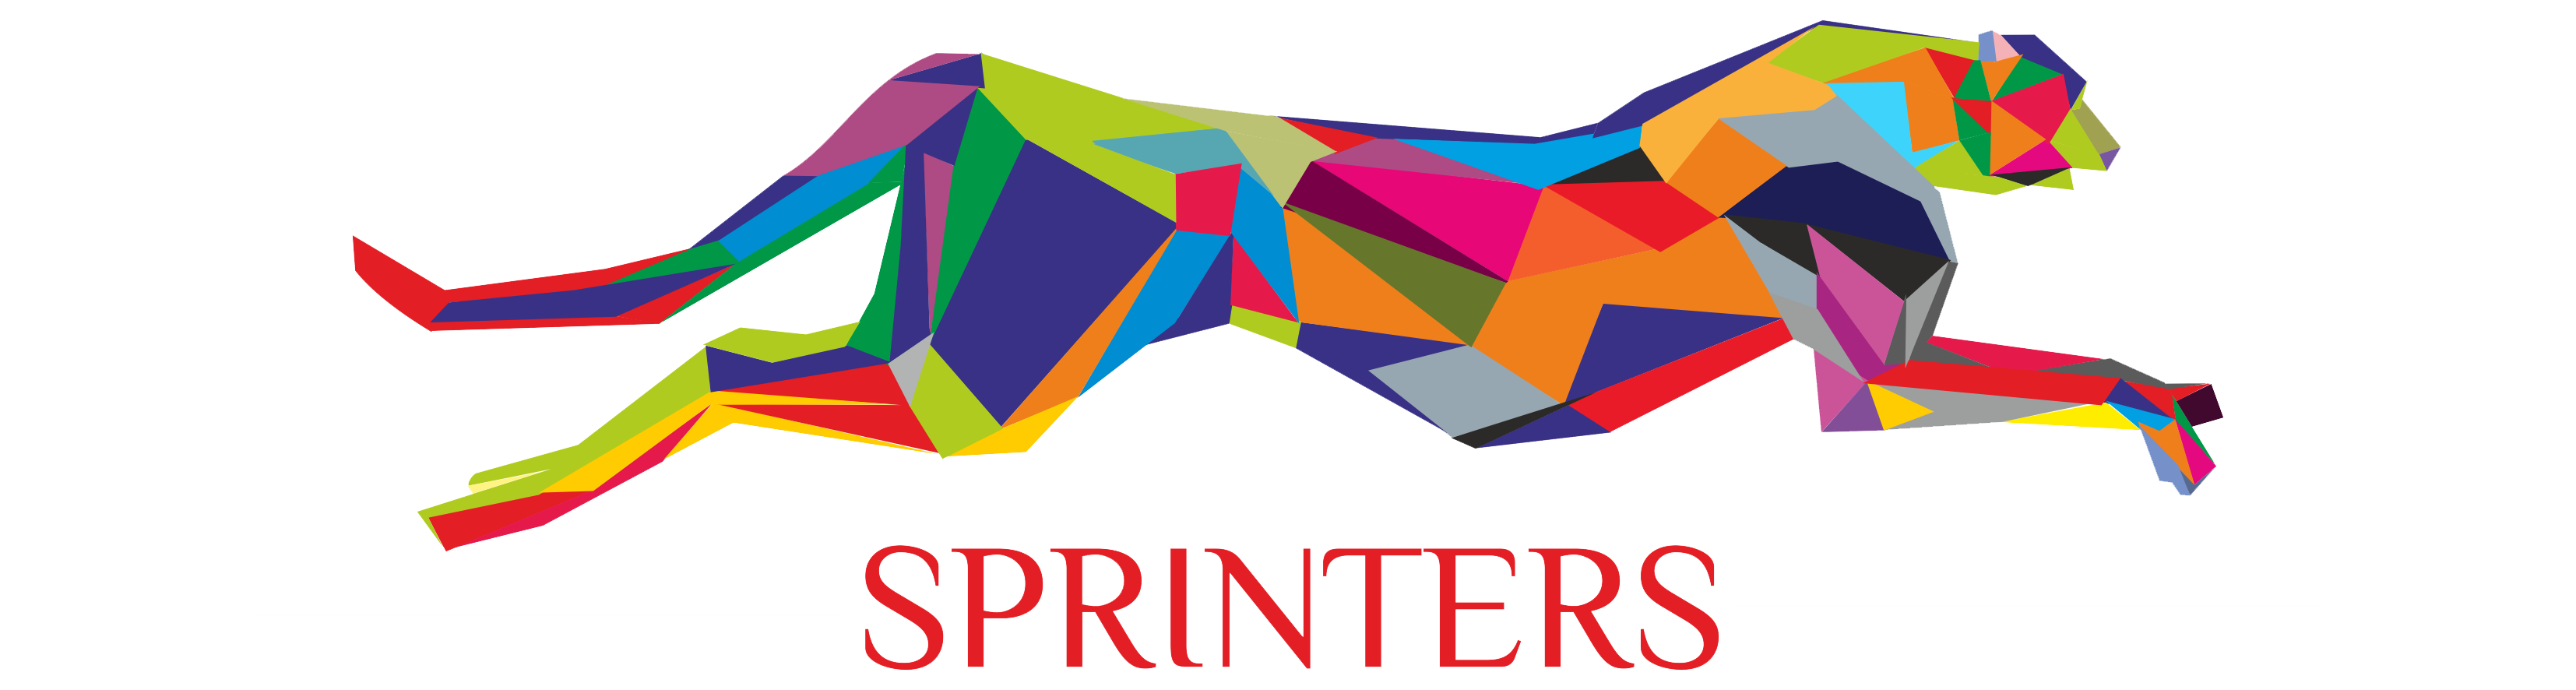 sprinters-logo-chennai